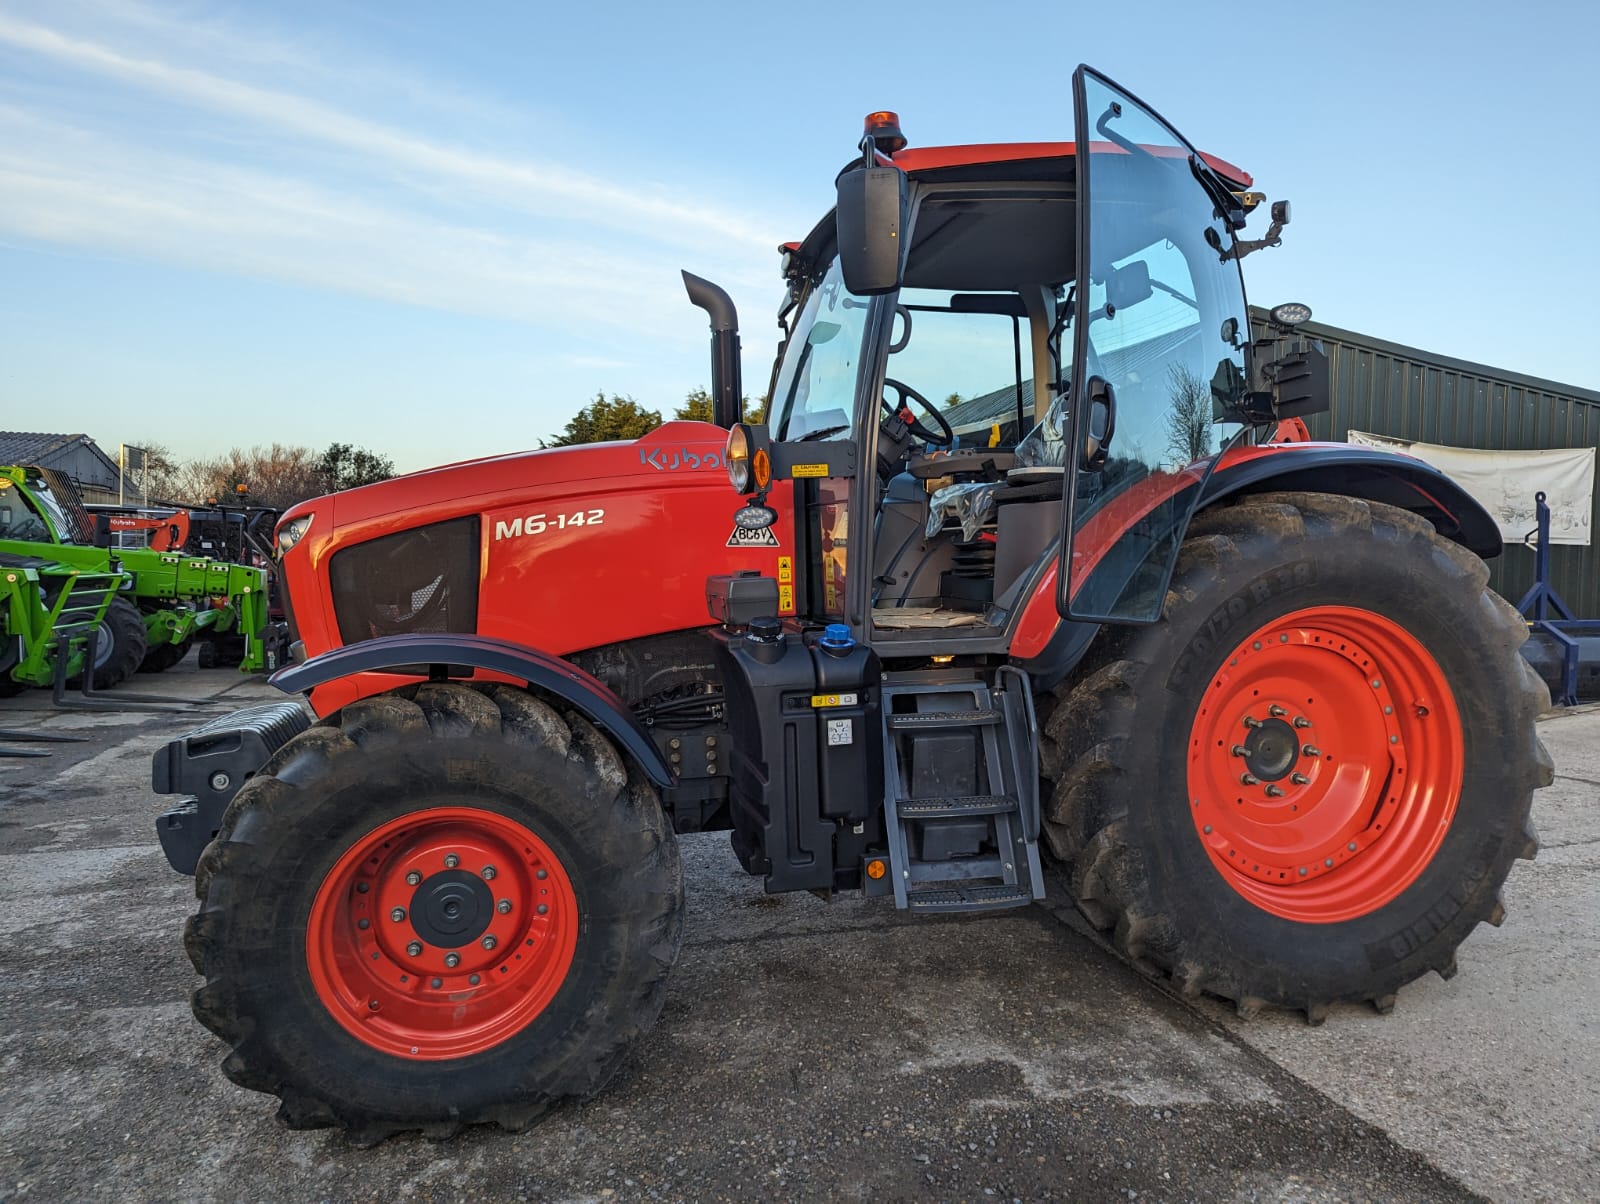 used-kubota-m6142;-140hp-tractor;-demo-tractor